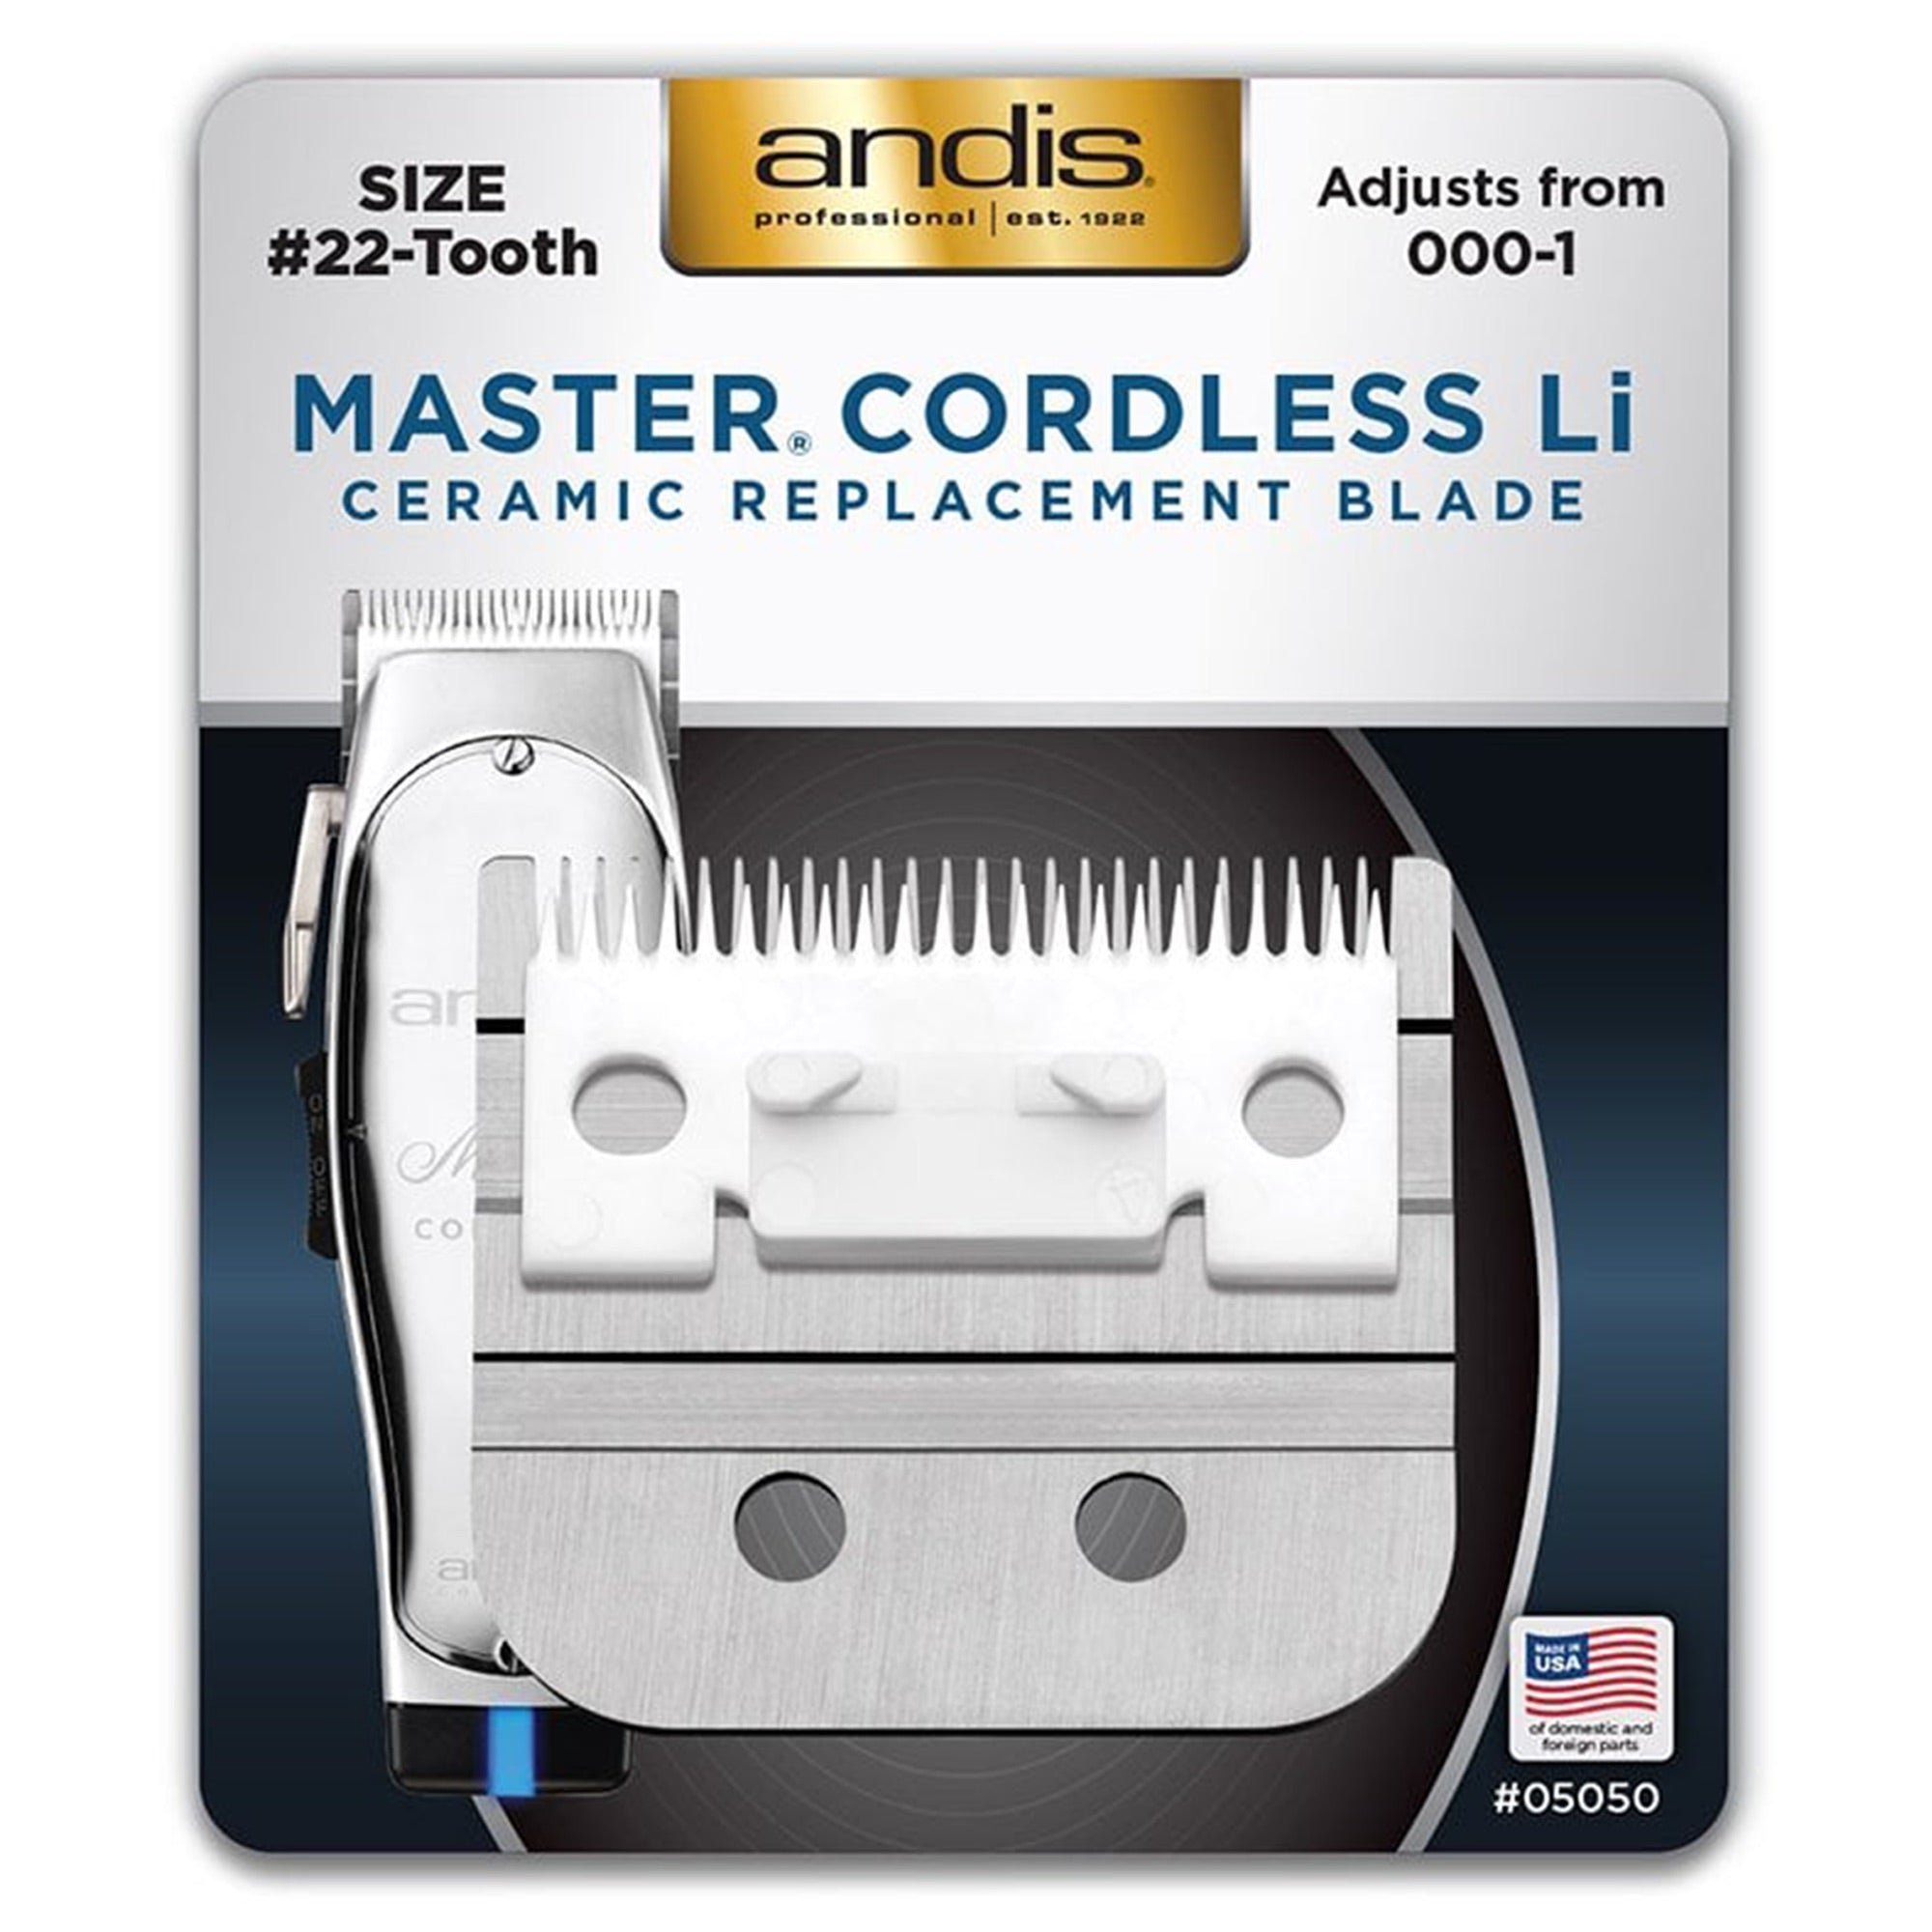 Andis - Master Cordless Li Ceramic Replacement Blade #05050